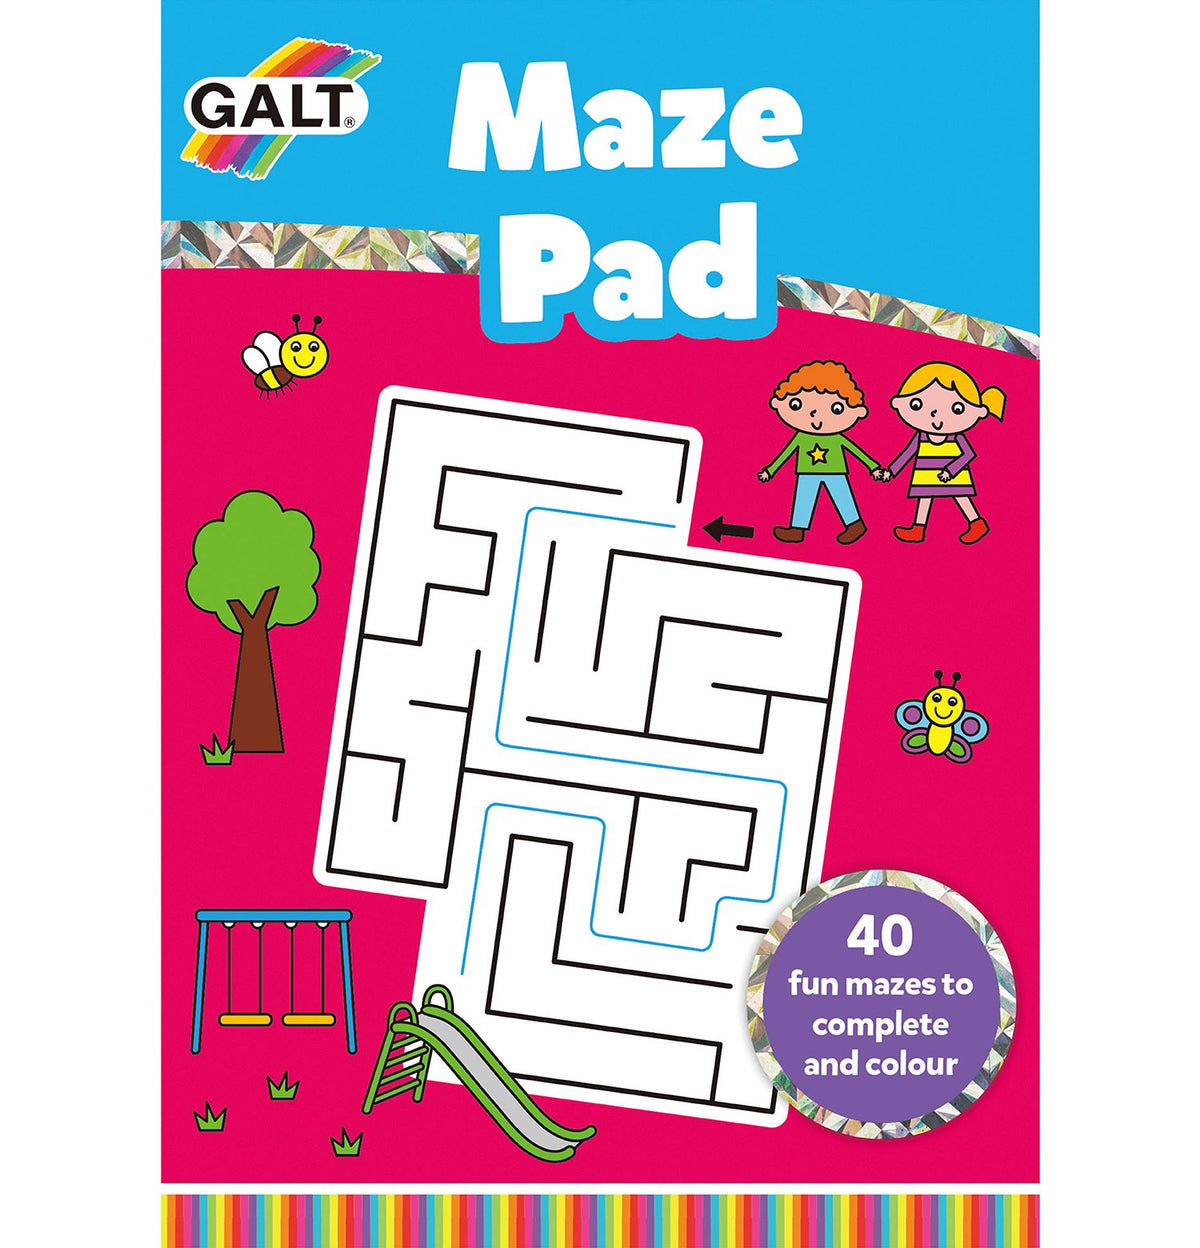 Maze pad - Galt